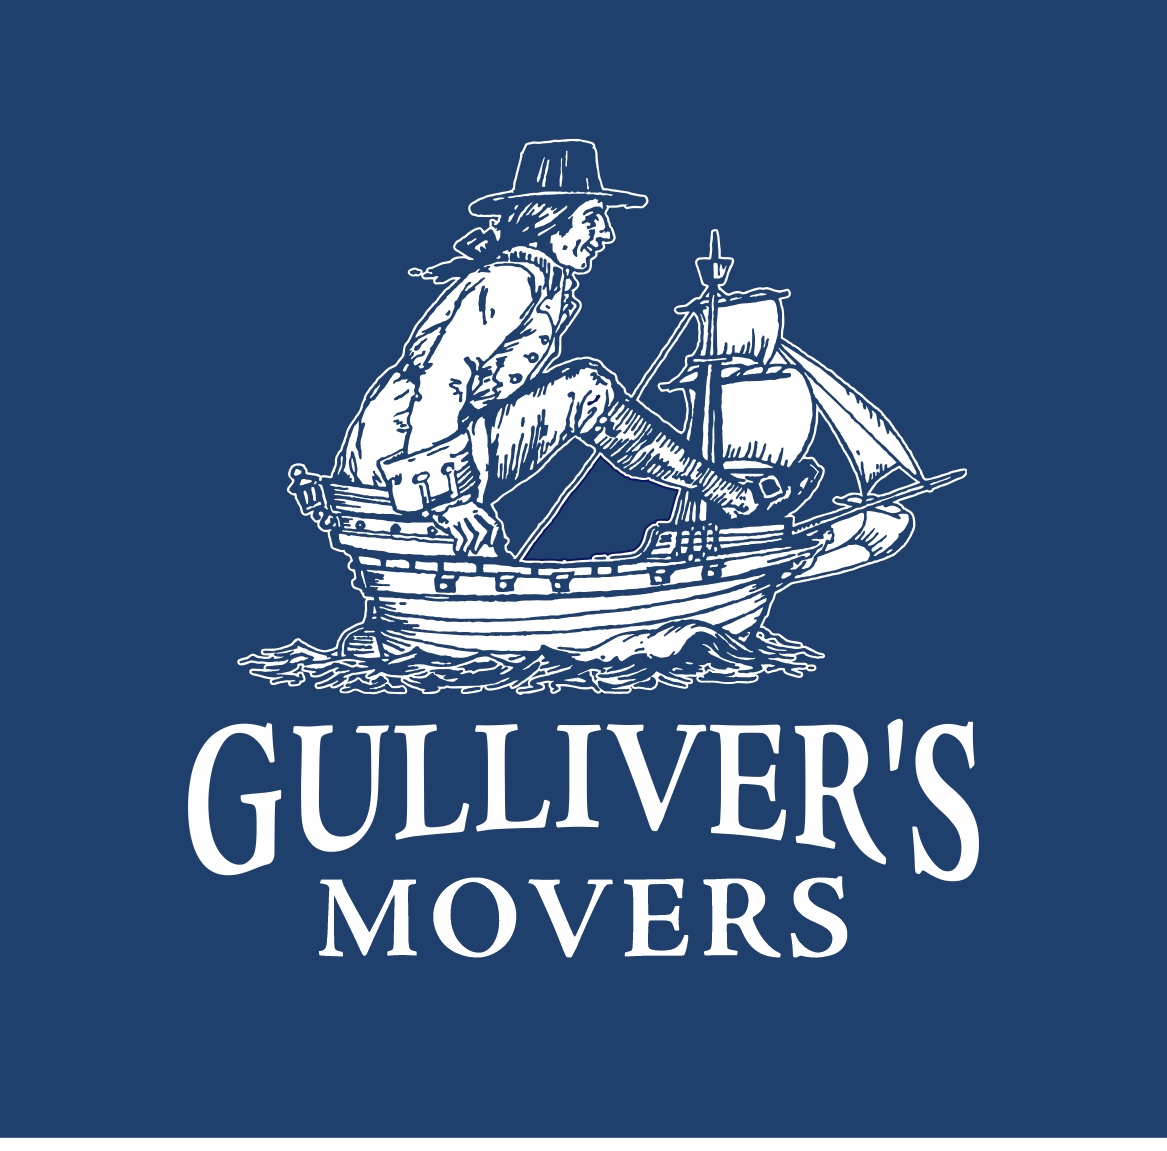 Gullivers Movers of Cincinnati